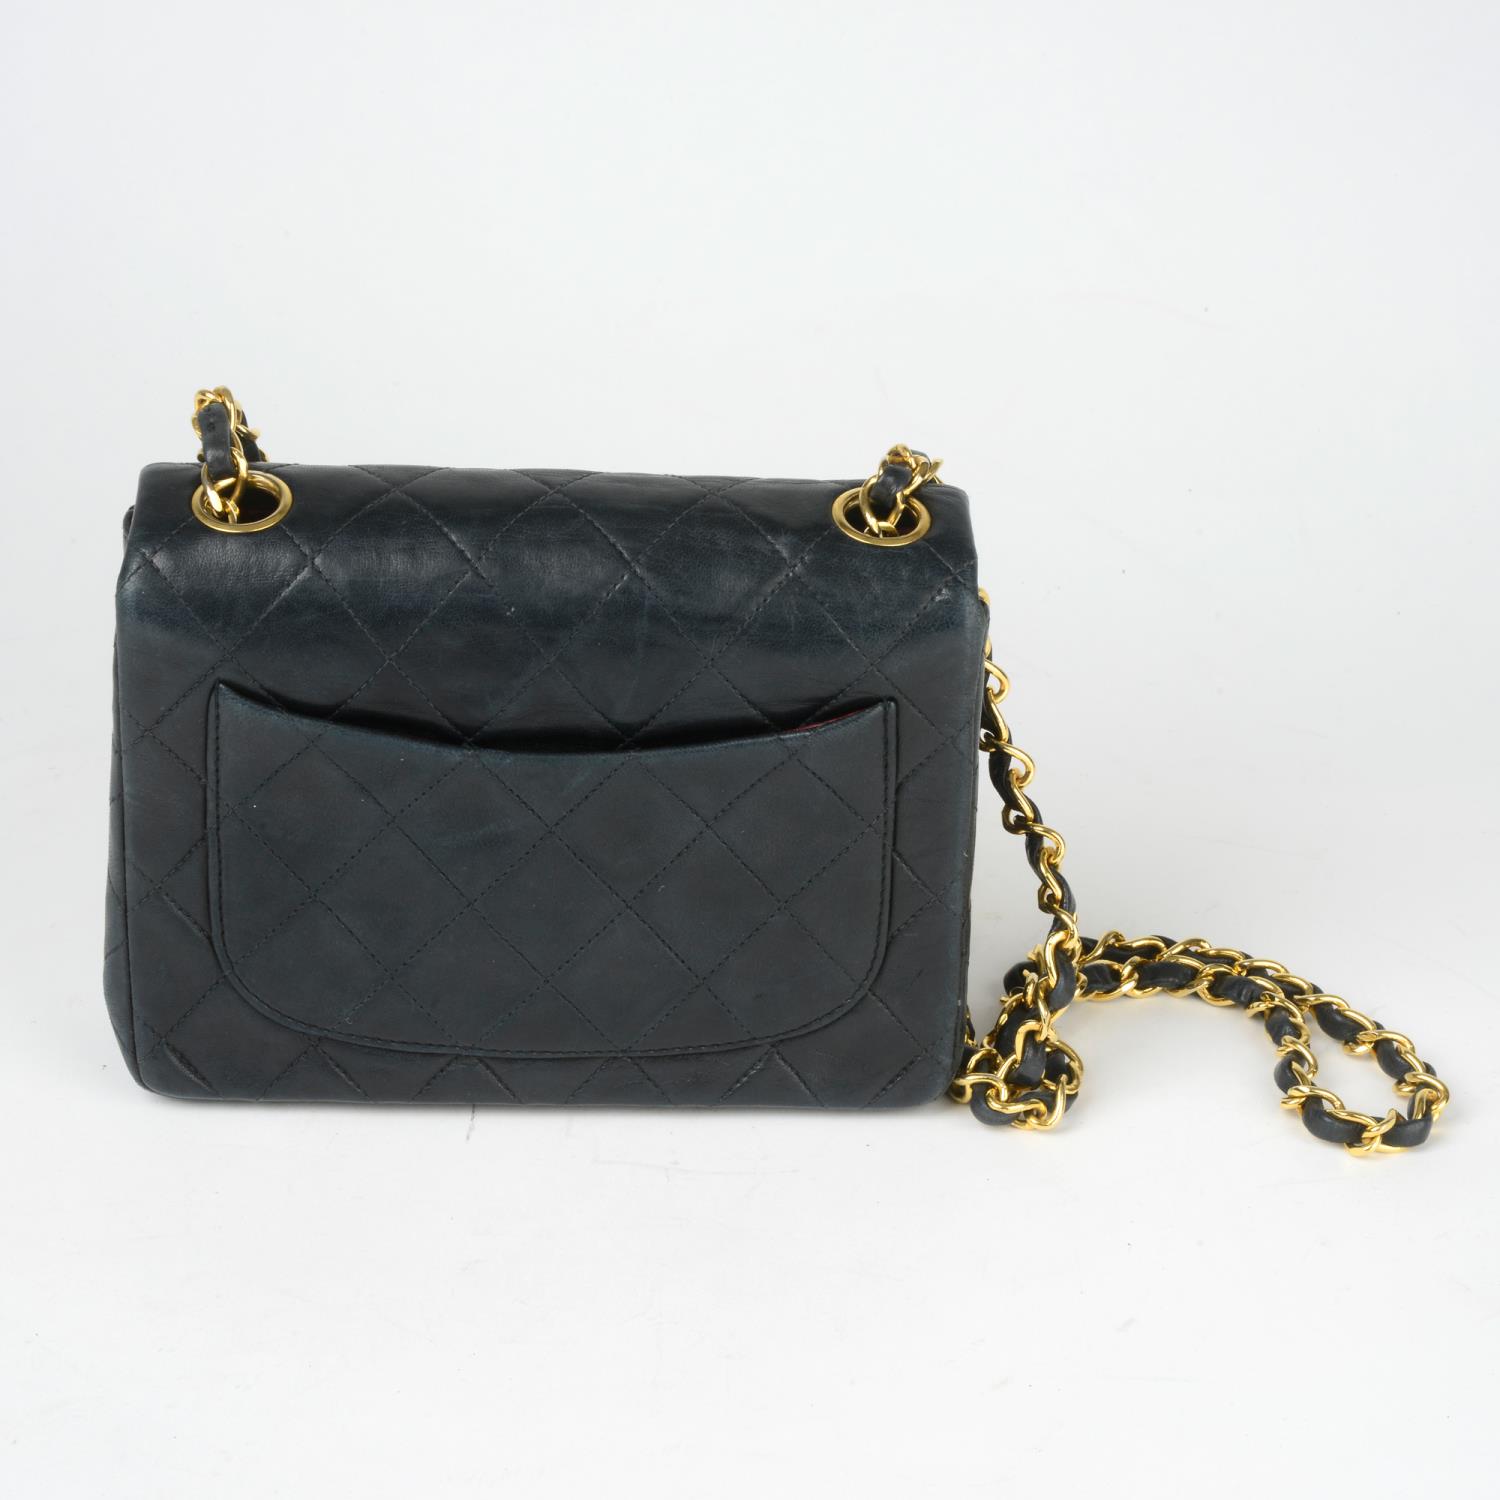 CHANEL - a Mini Square Classic Flap handbag. - Image 3 of 5